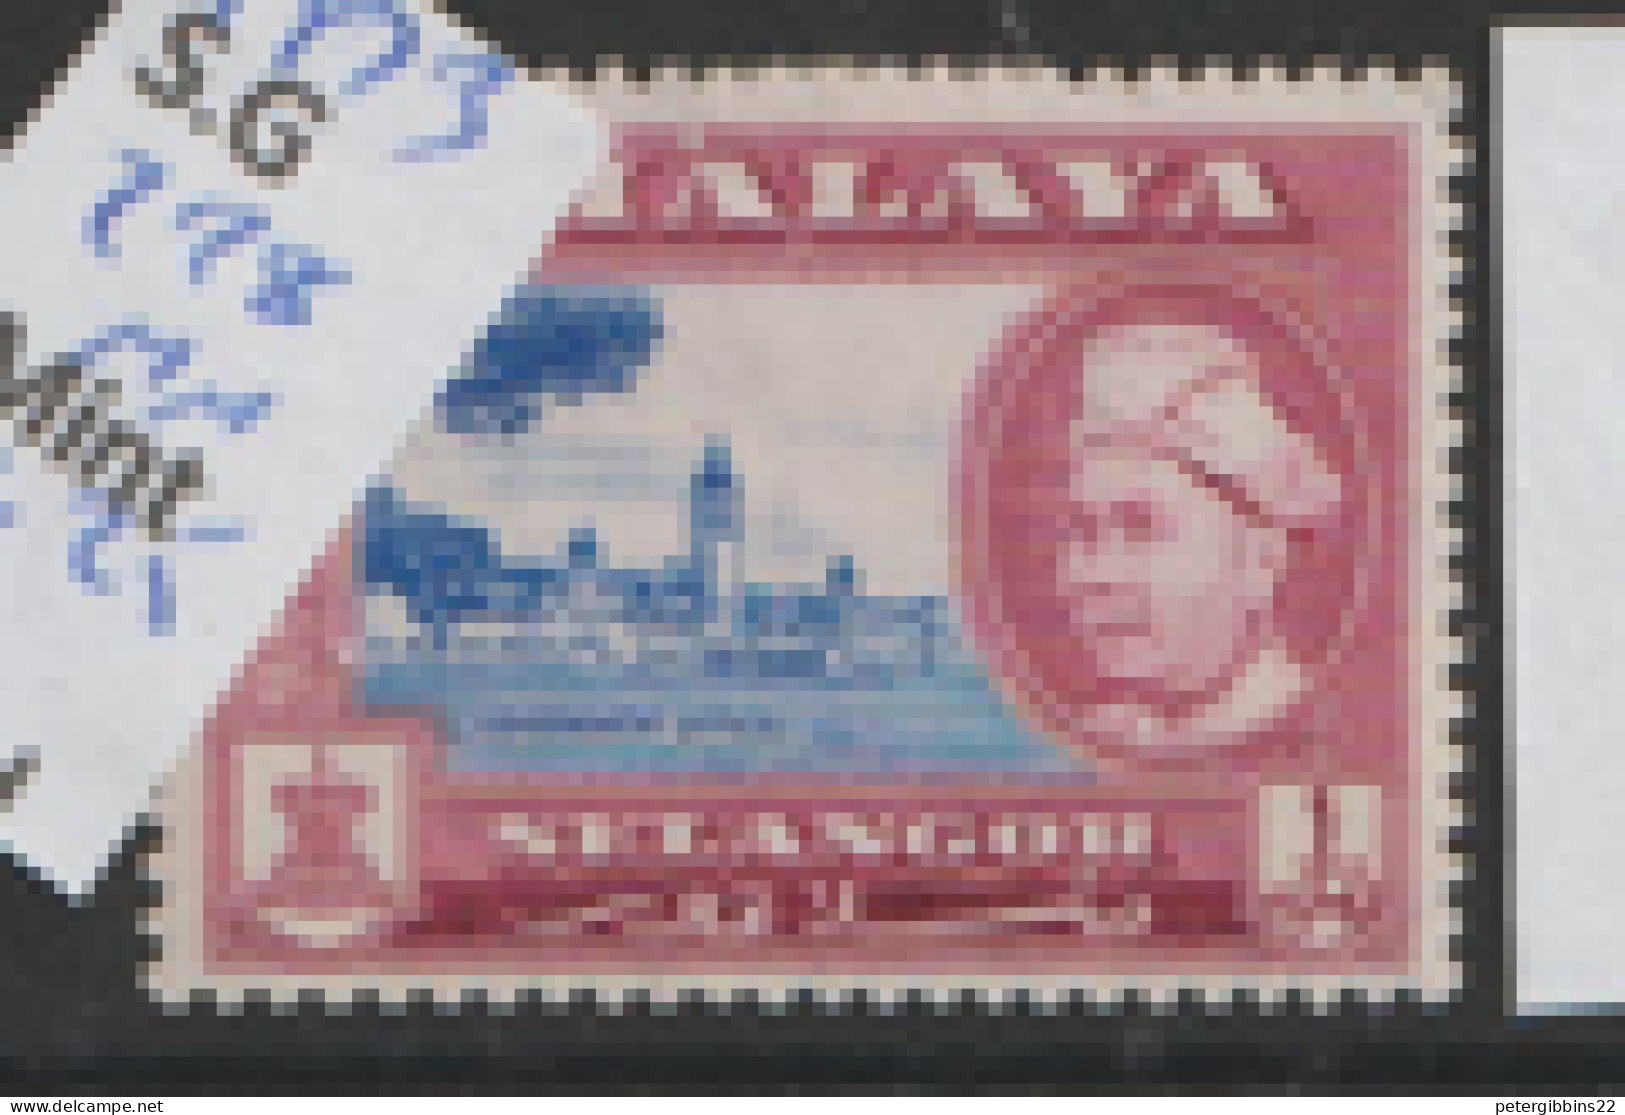 Malaysia  Selangor  1957  SG 121 $1  Mounted Mint - Selangor